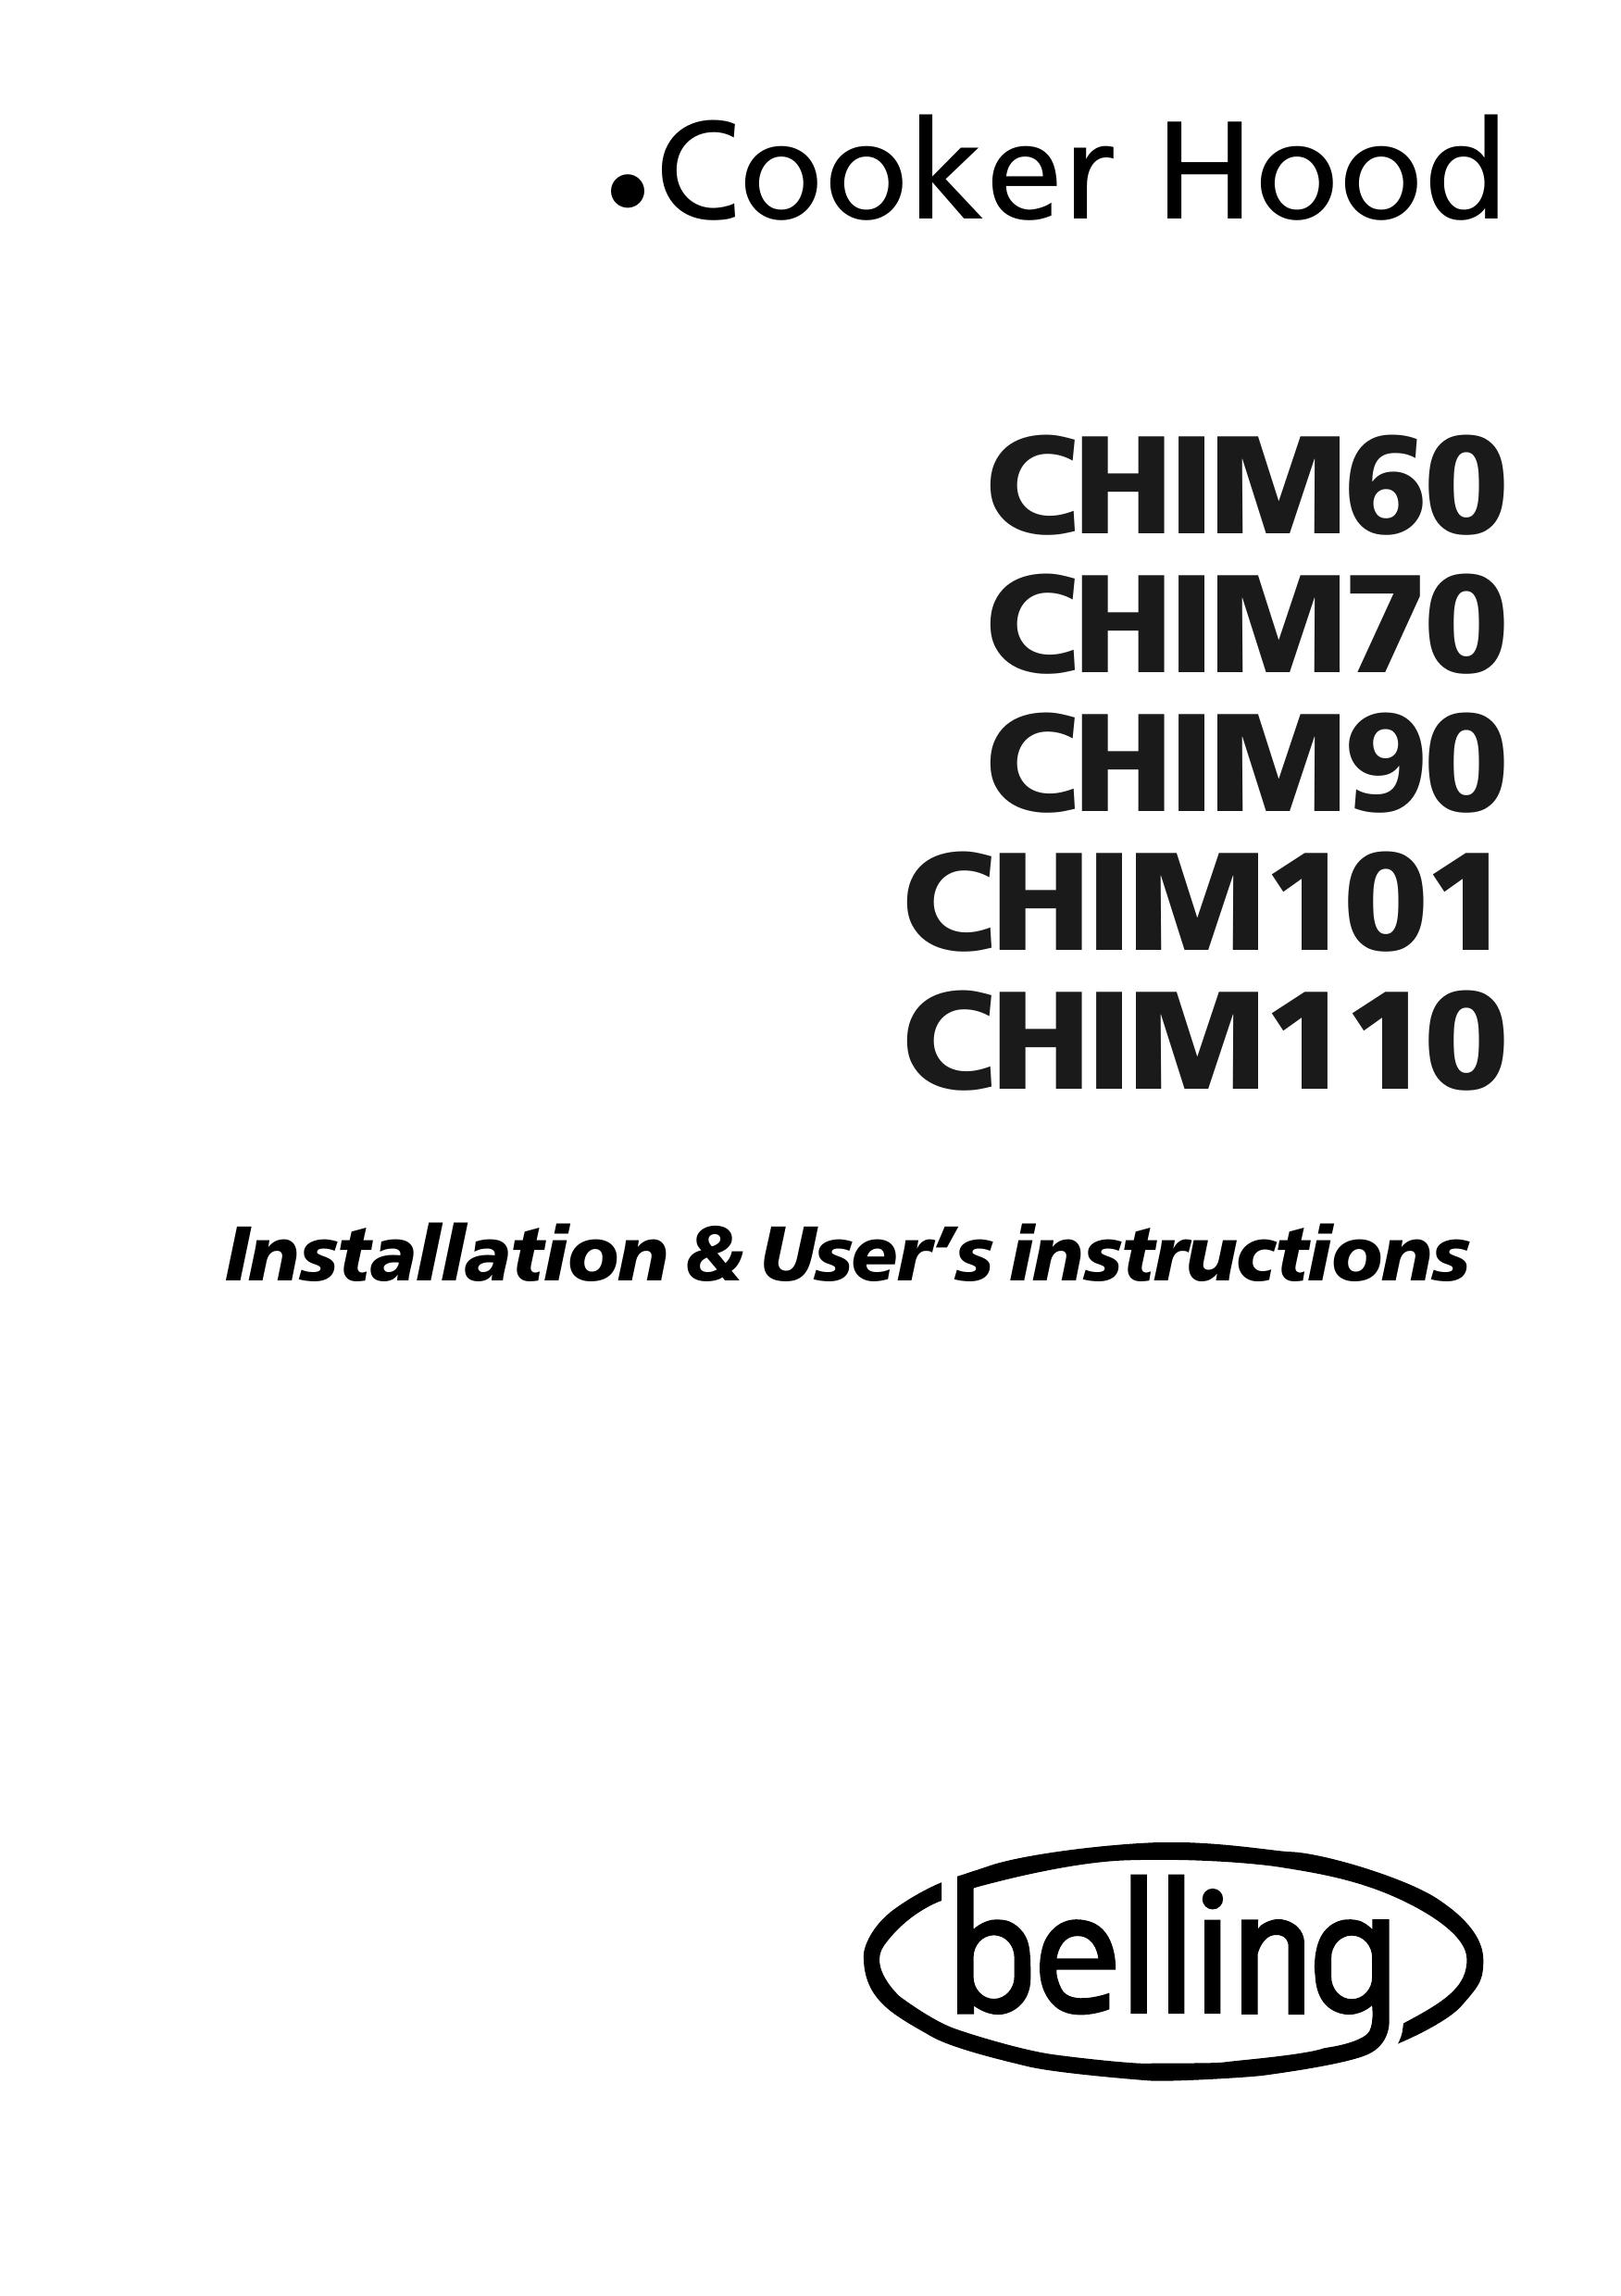 Glen Dimplex Home Appliances Ltd CHIM101 Ventilation Hood User Manual